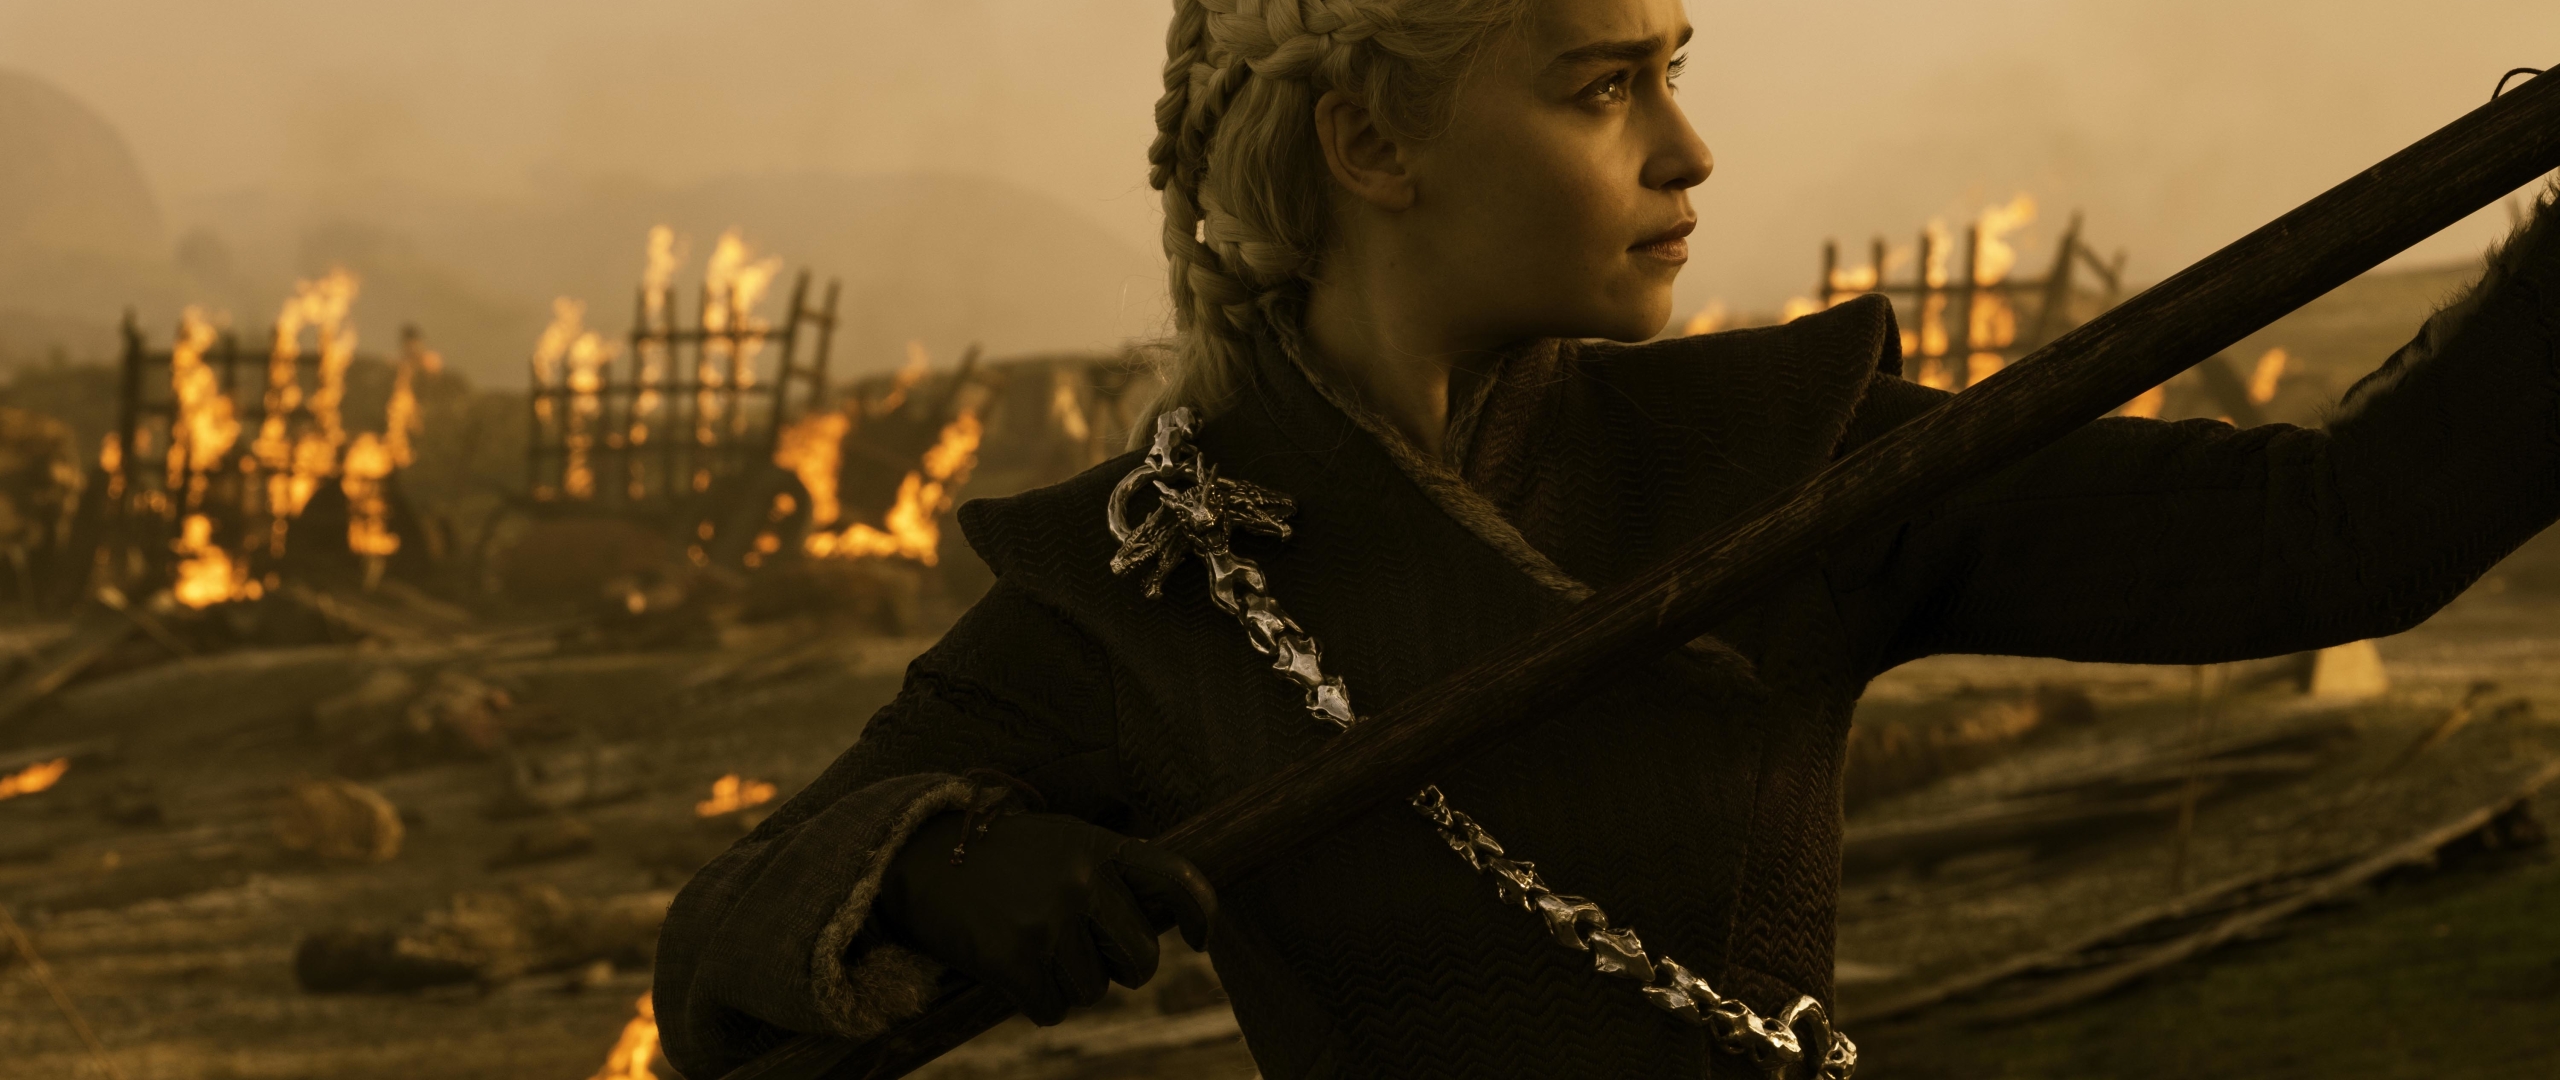 Download Game Of Thrones Season 7 On Utorrent